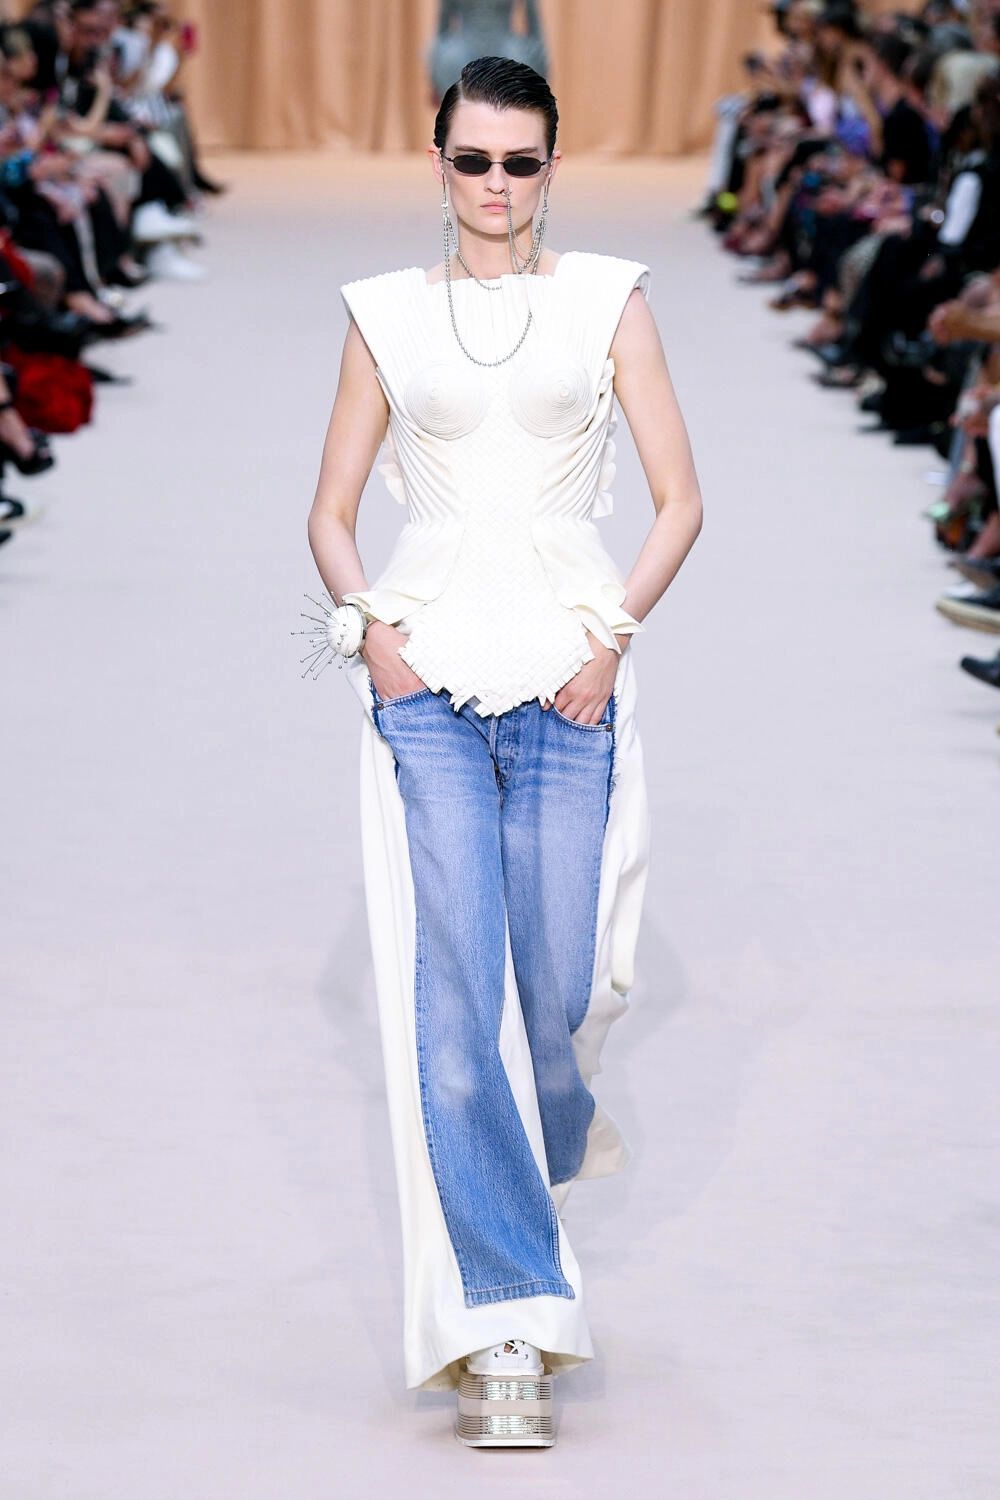 Jean Paul Gaultier Haute Couture Fall/Winter 2022